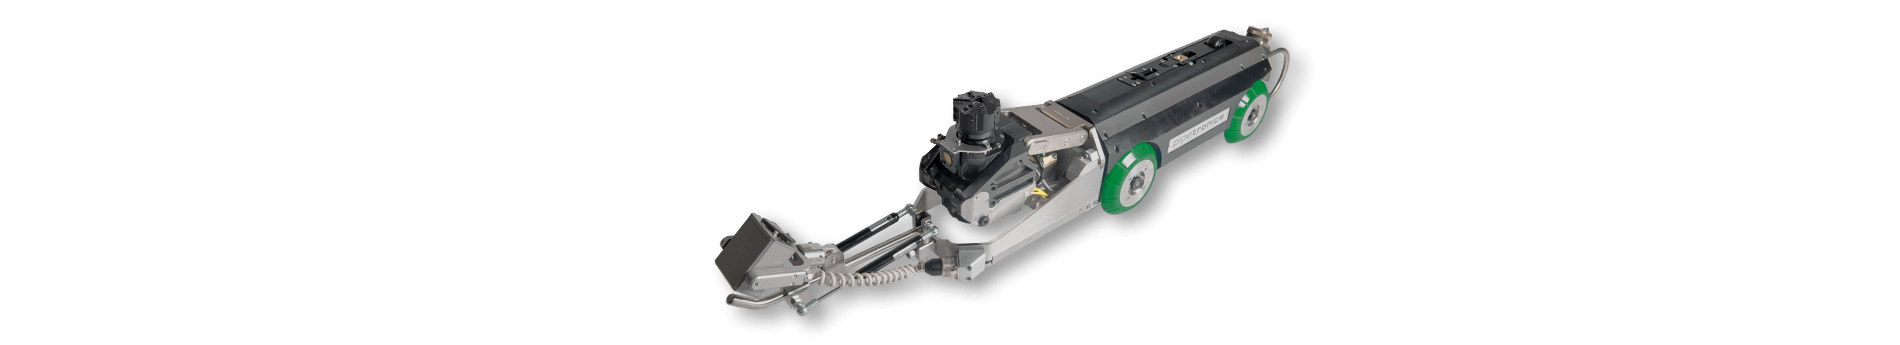 Electric milling robot EF 150 